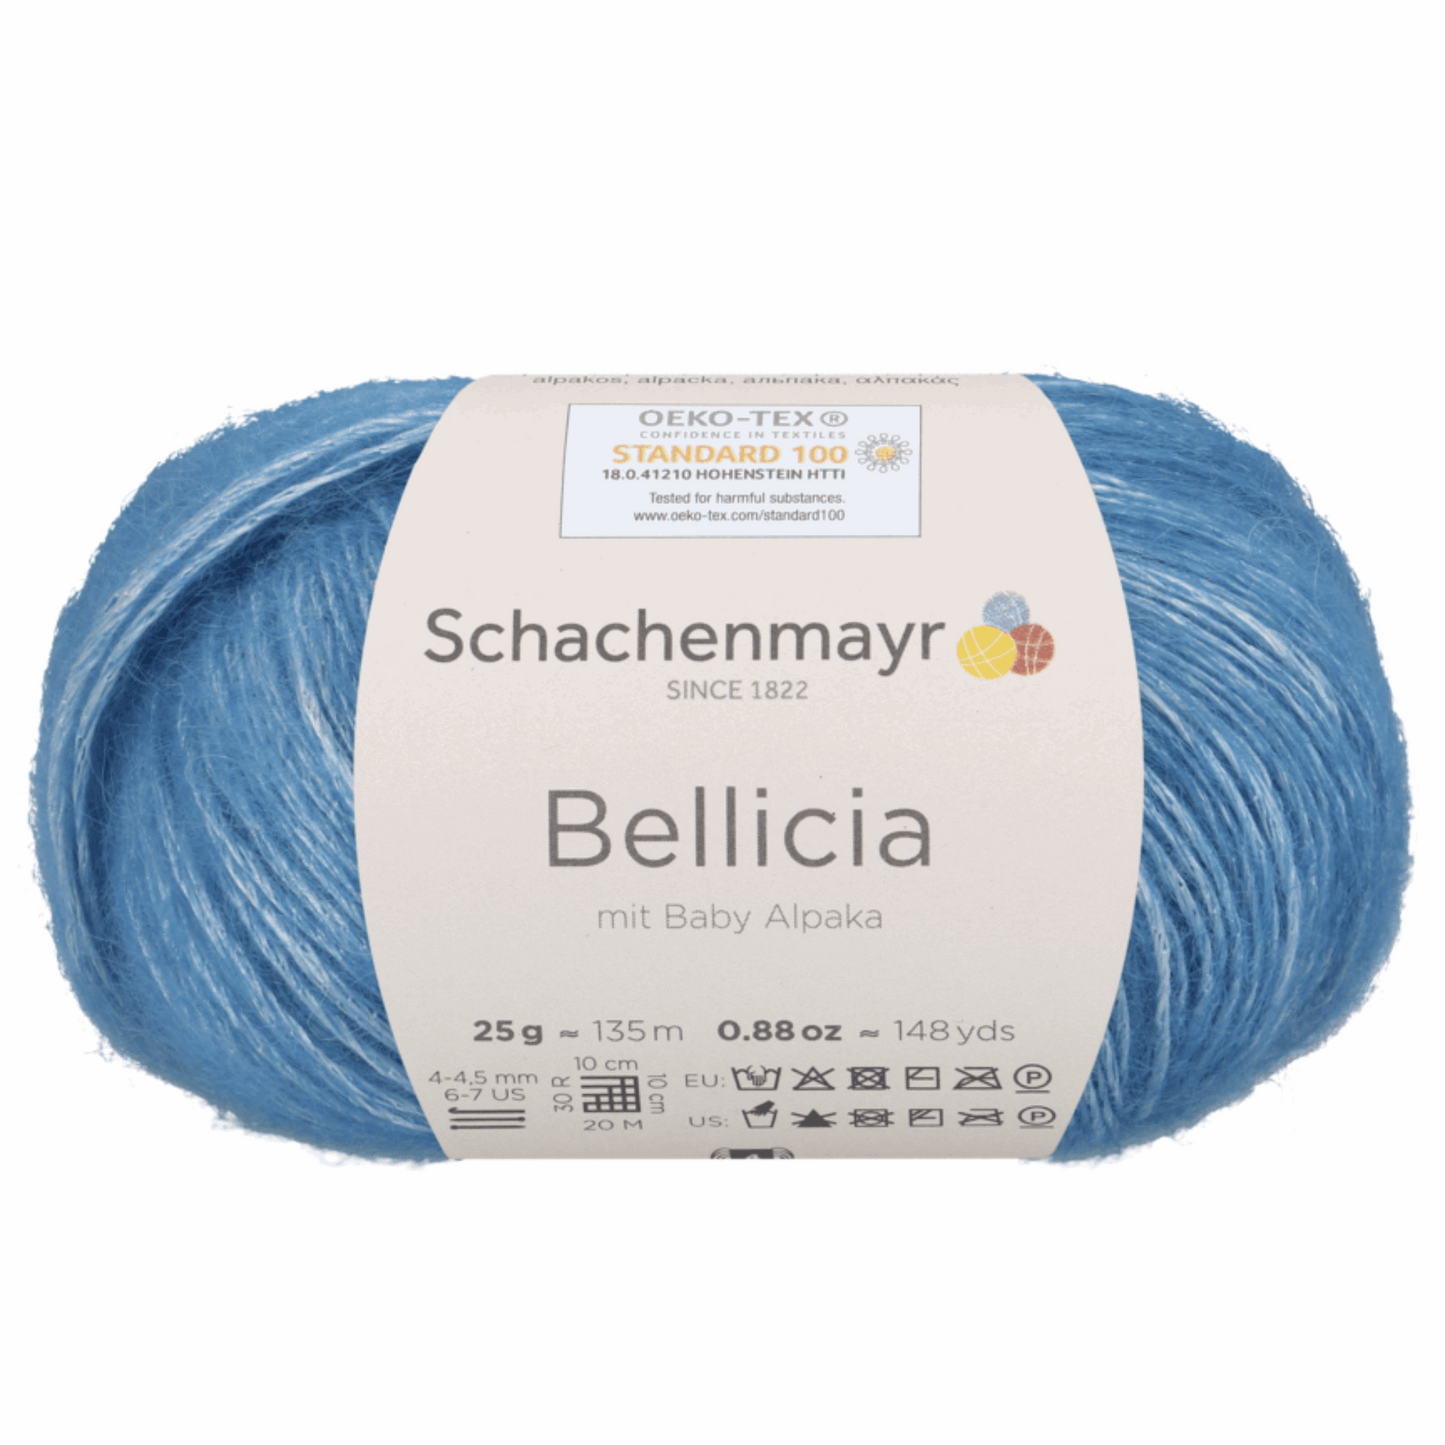 Schachenmayr Bellicia 25g, 97005, Farbe hellblau 52